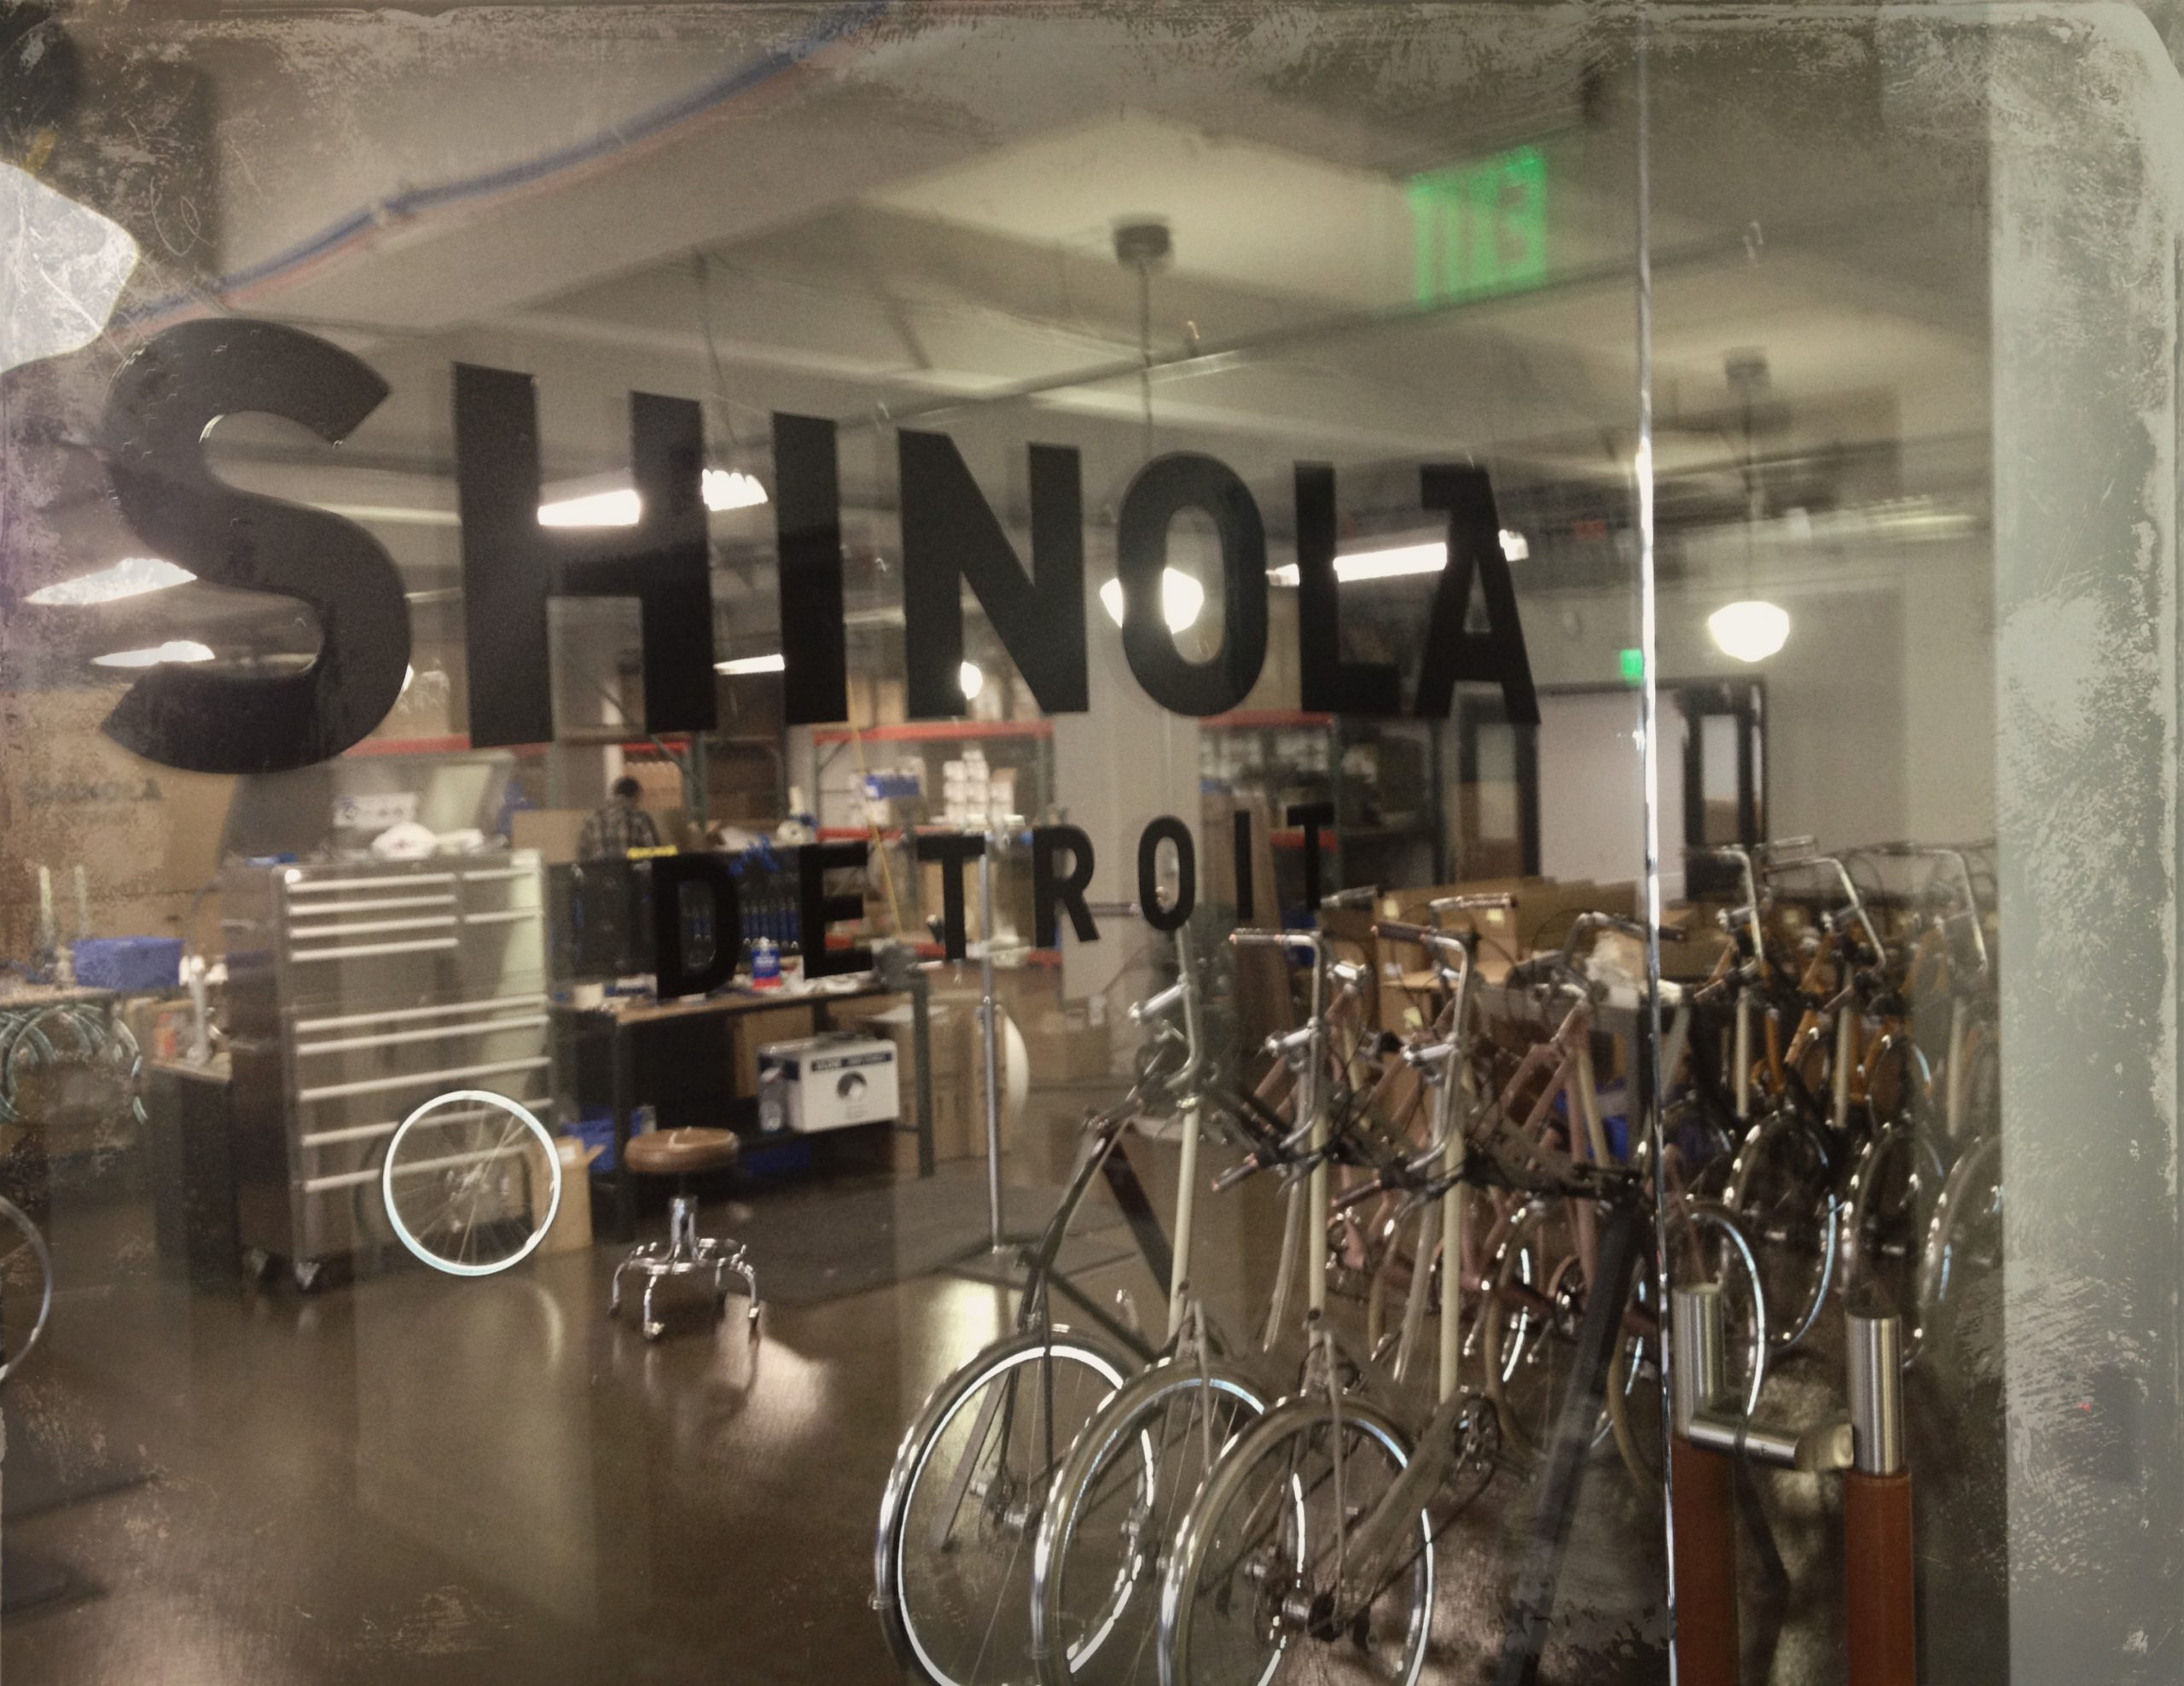 Shinola – Built in Detroit